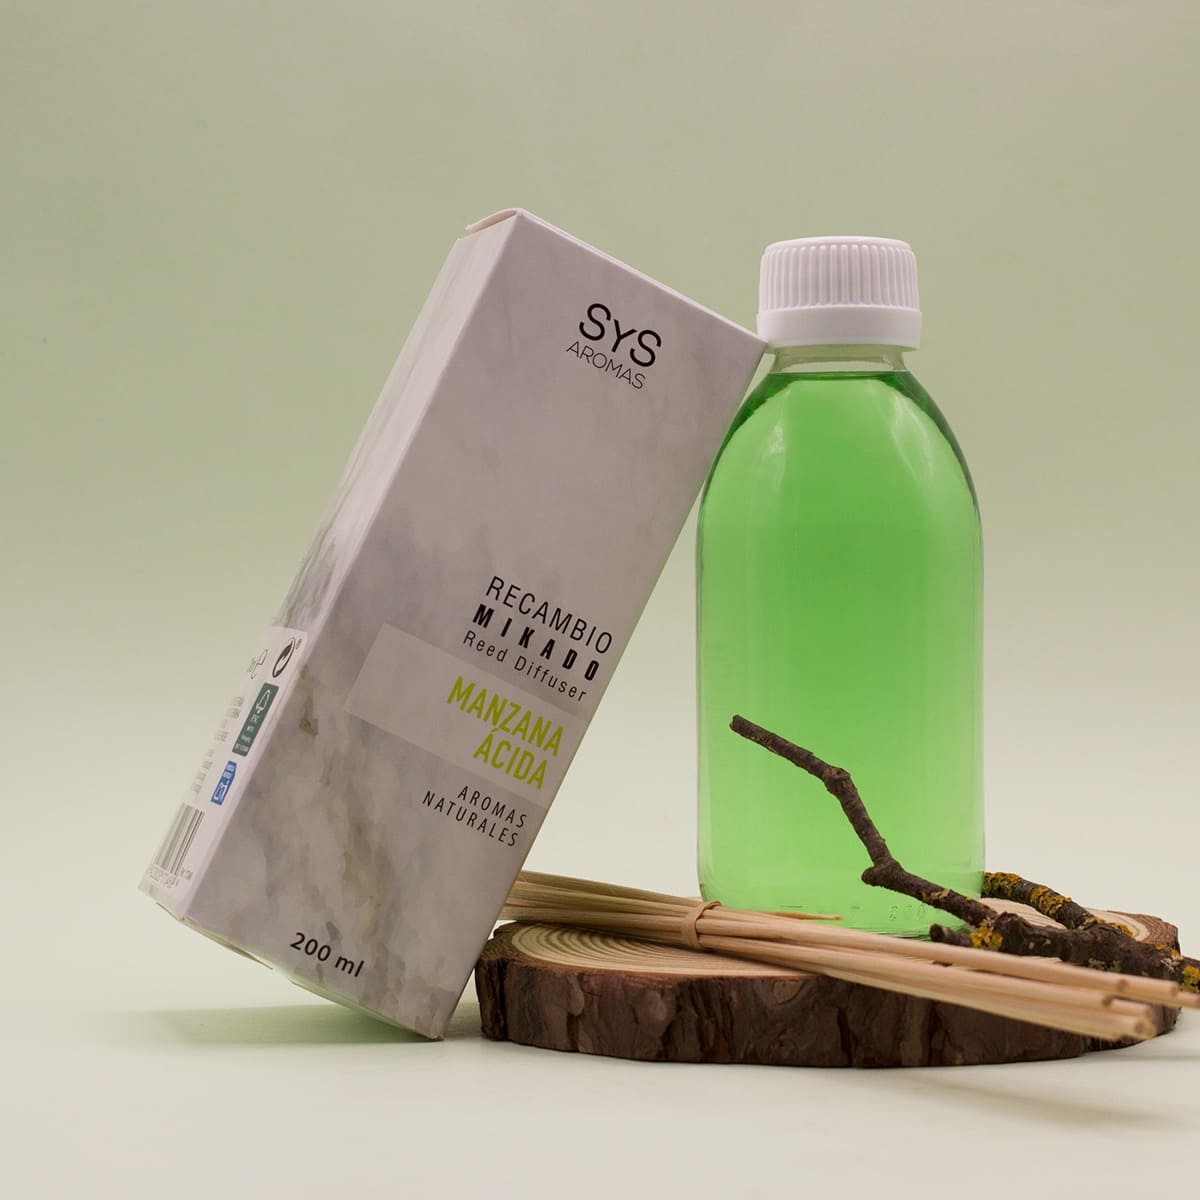 Comprar Recambio Mikado Manzana Acida 200ml + Palos Marmol Collection SYS Aromas